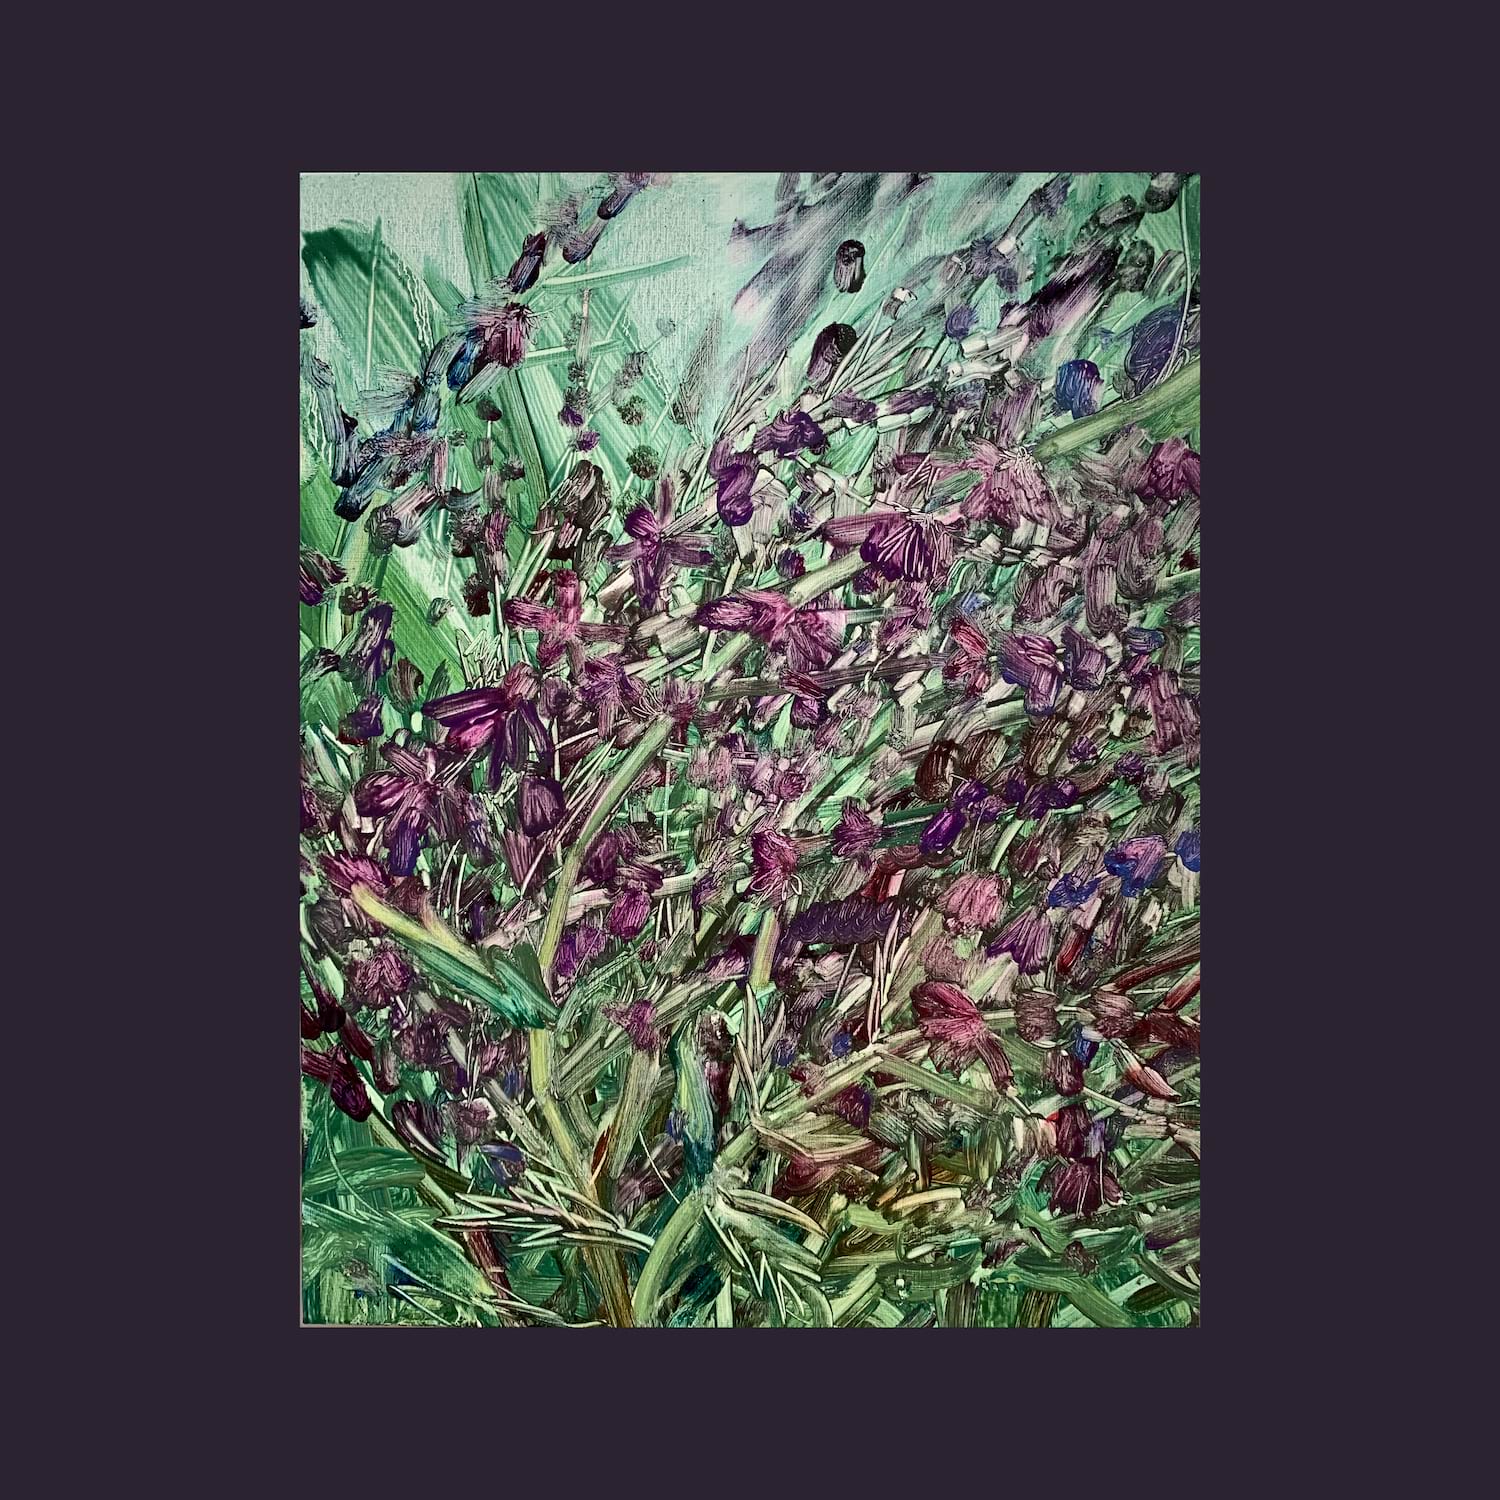  Lesley Wamsley. Lavender.  Oil on panel. 2019. 